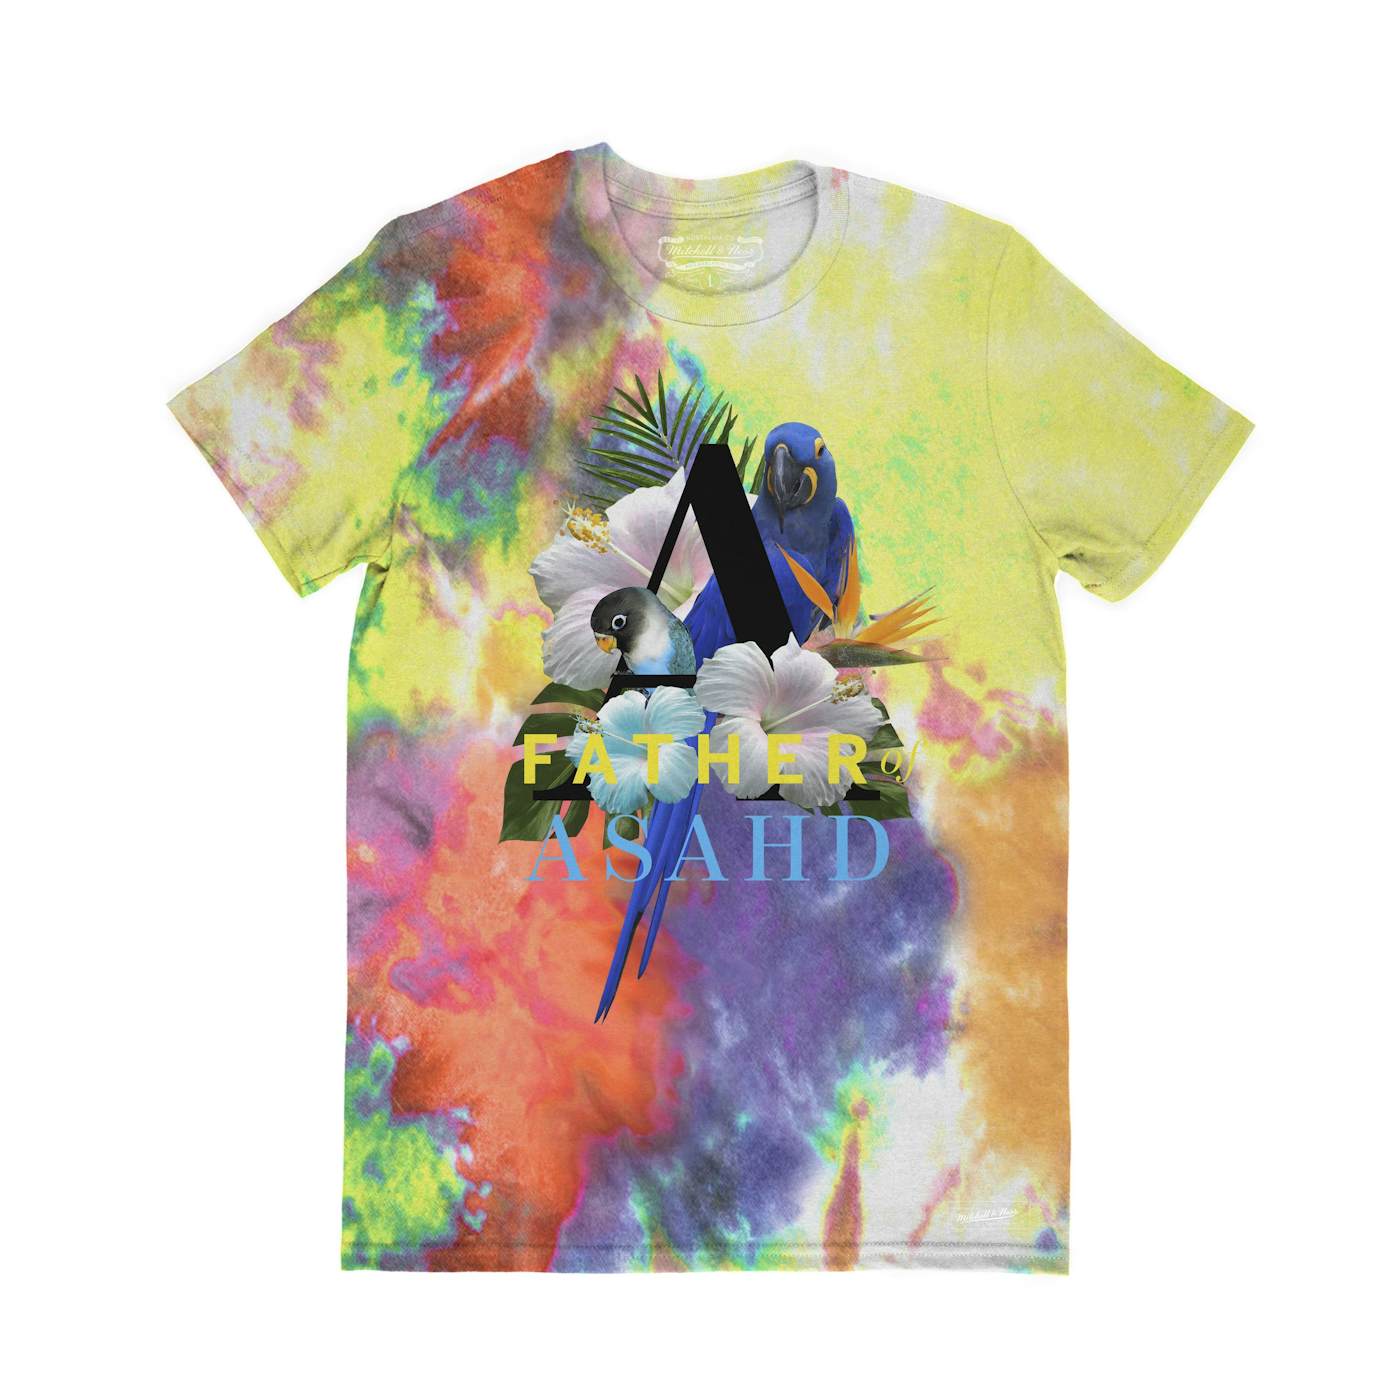 DJ Khaled Father of Asahd x Mitchell & Ness Tie-Dye T-Shirt